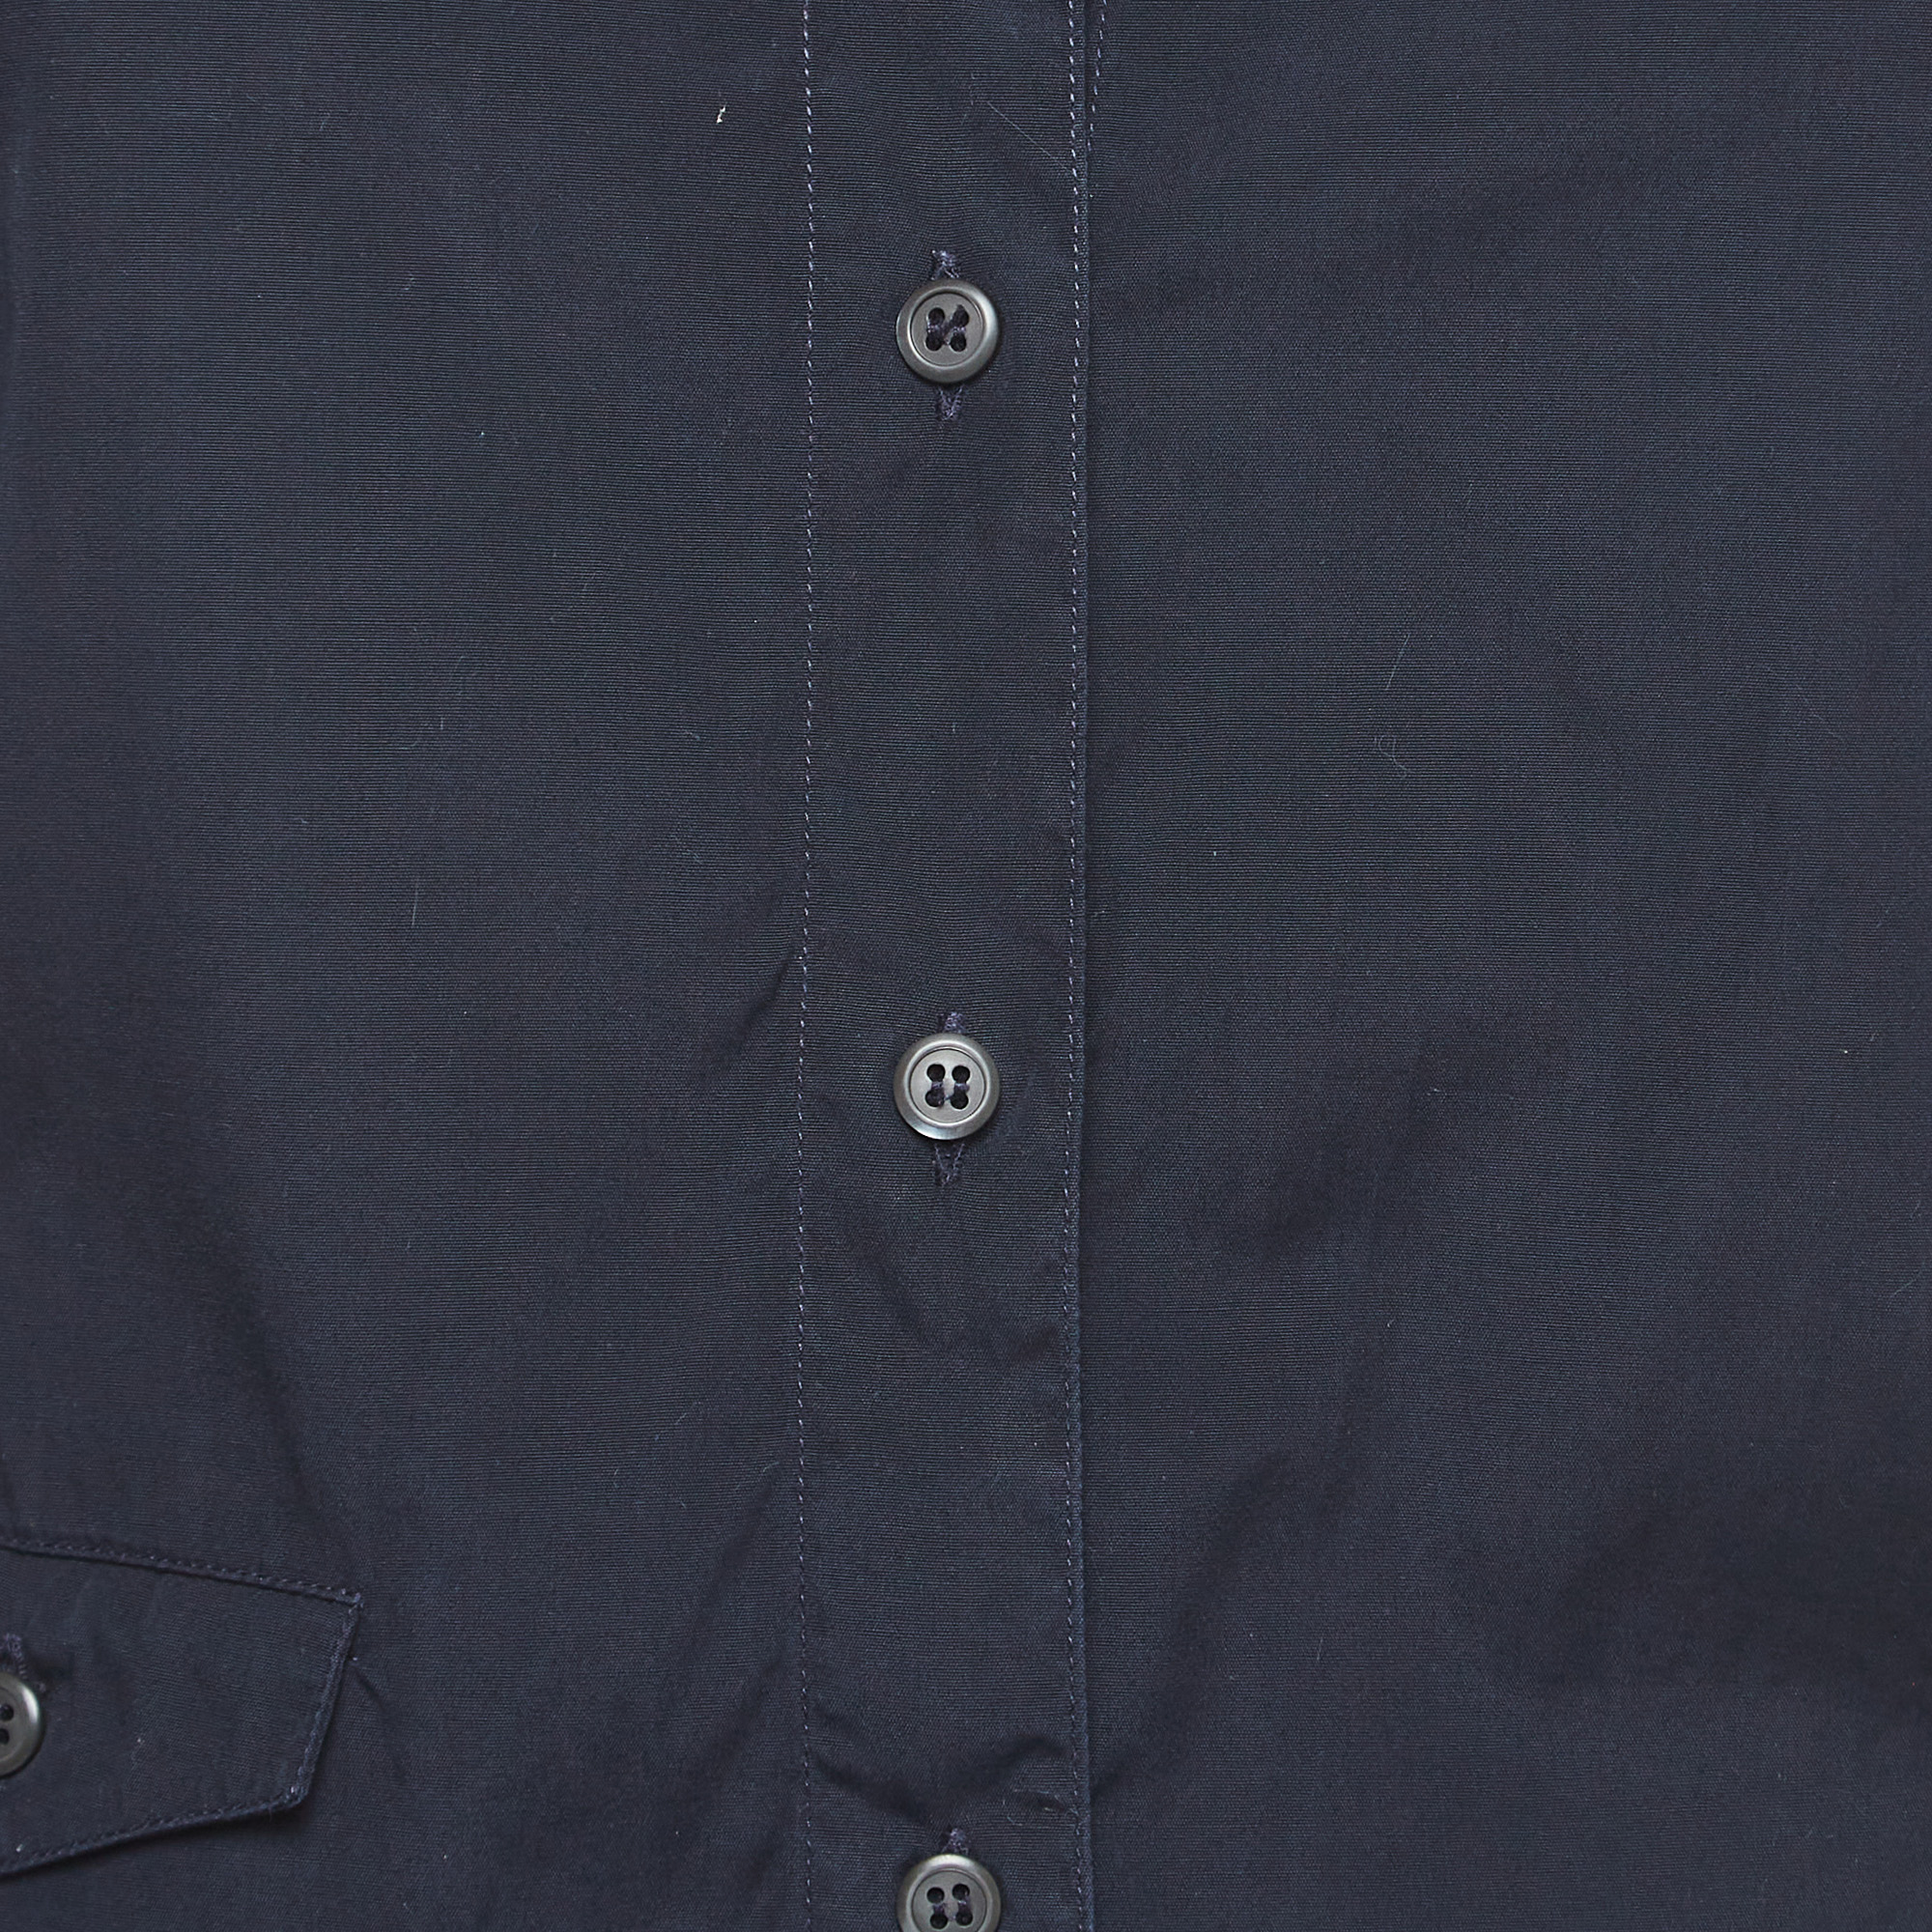 Prada Navy Blue Cotton Button Front Shirt S